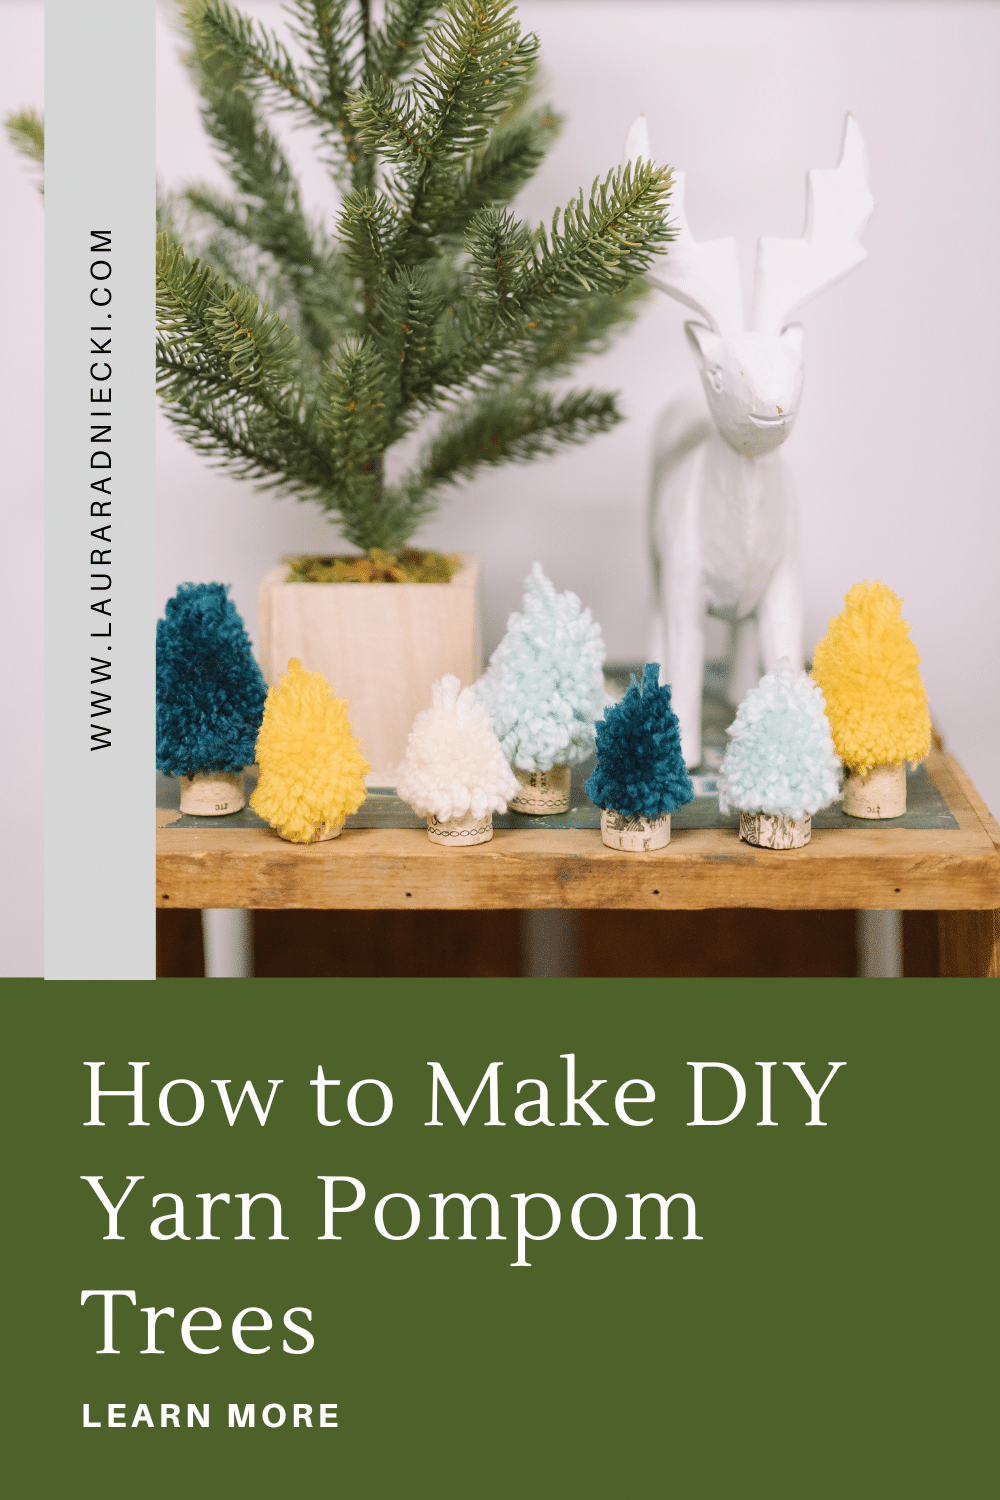 How to Make DIY Yarn Pompom Trees